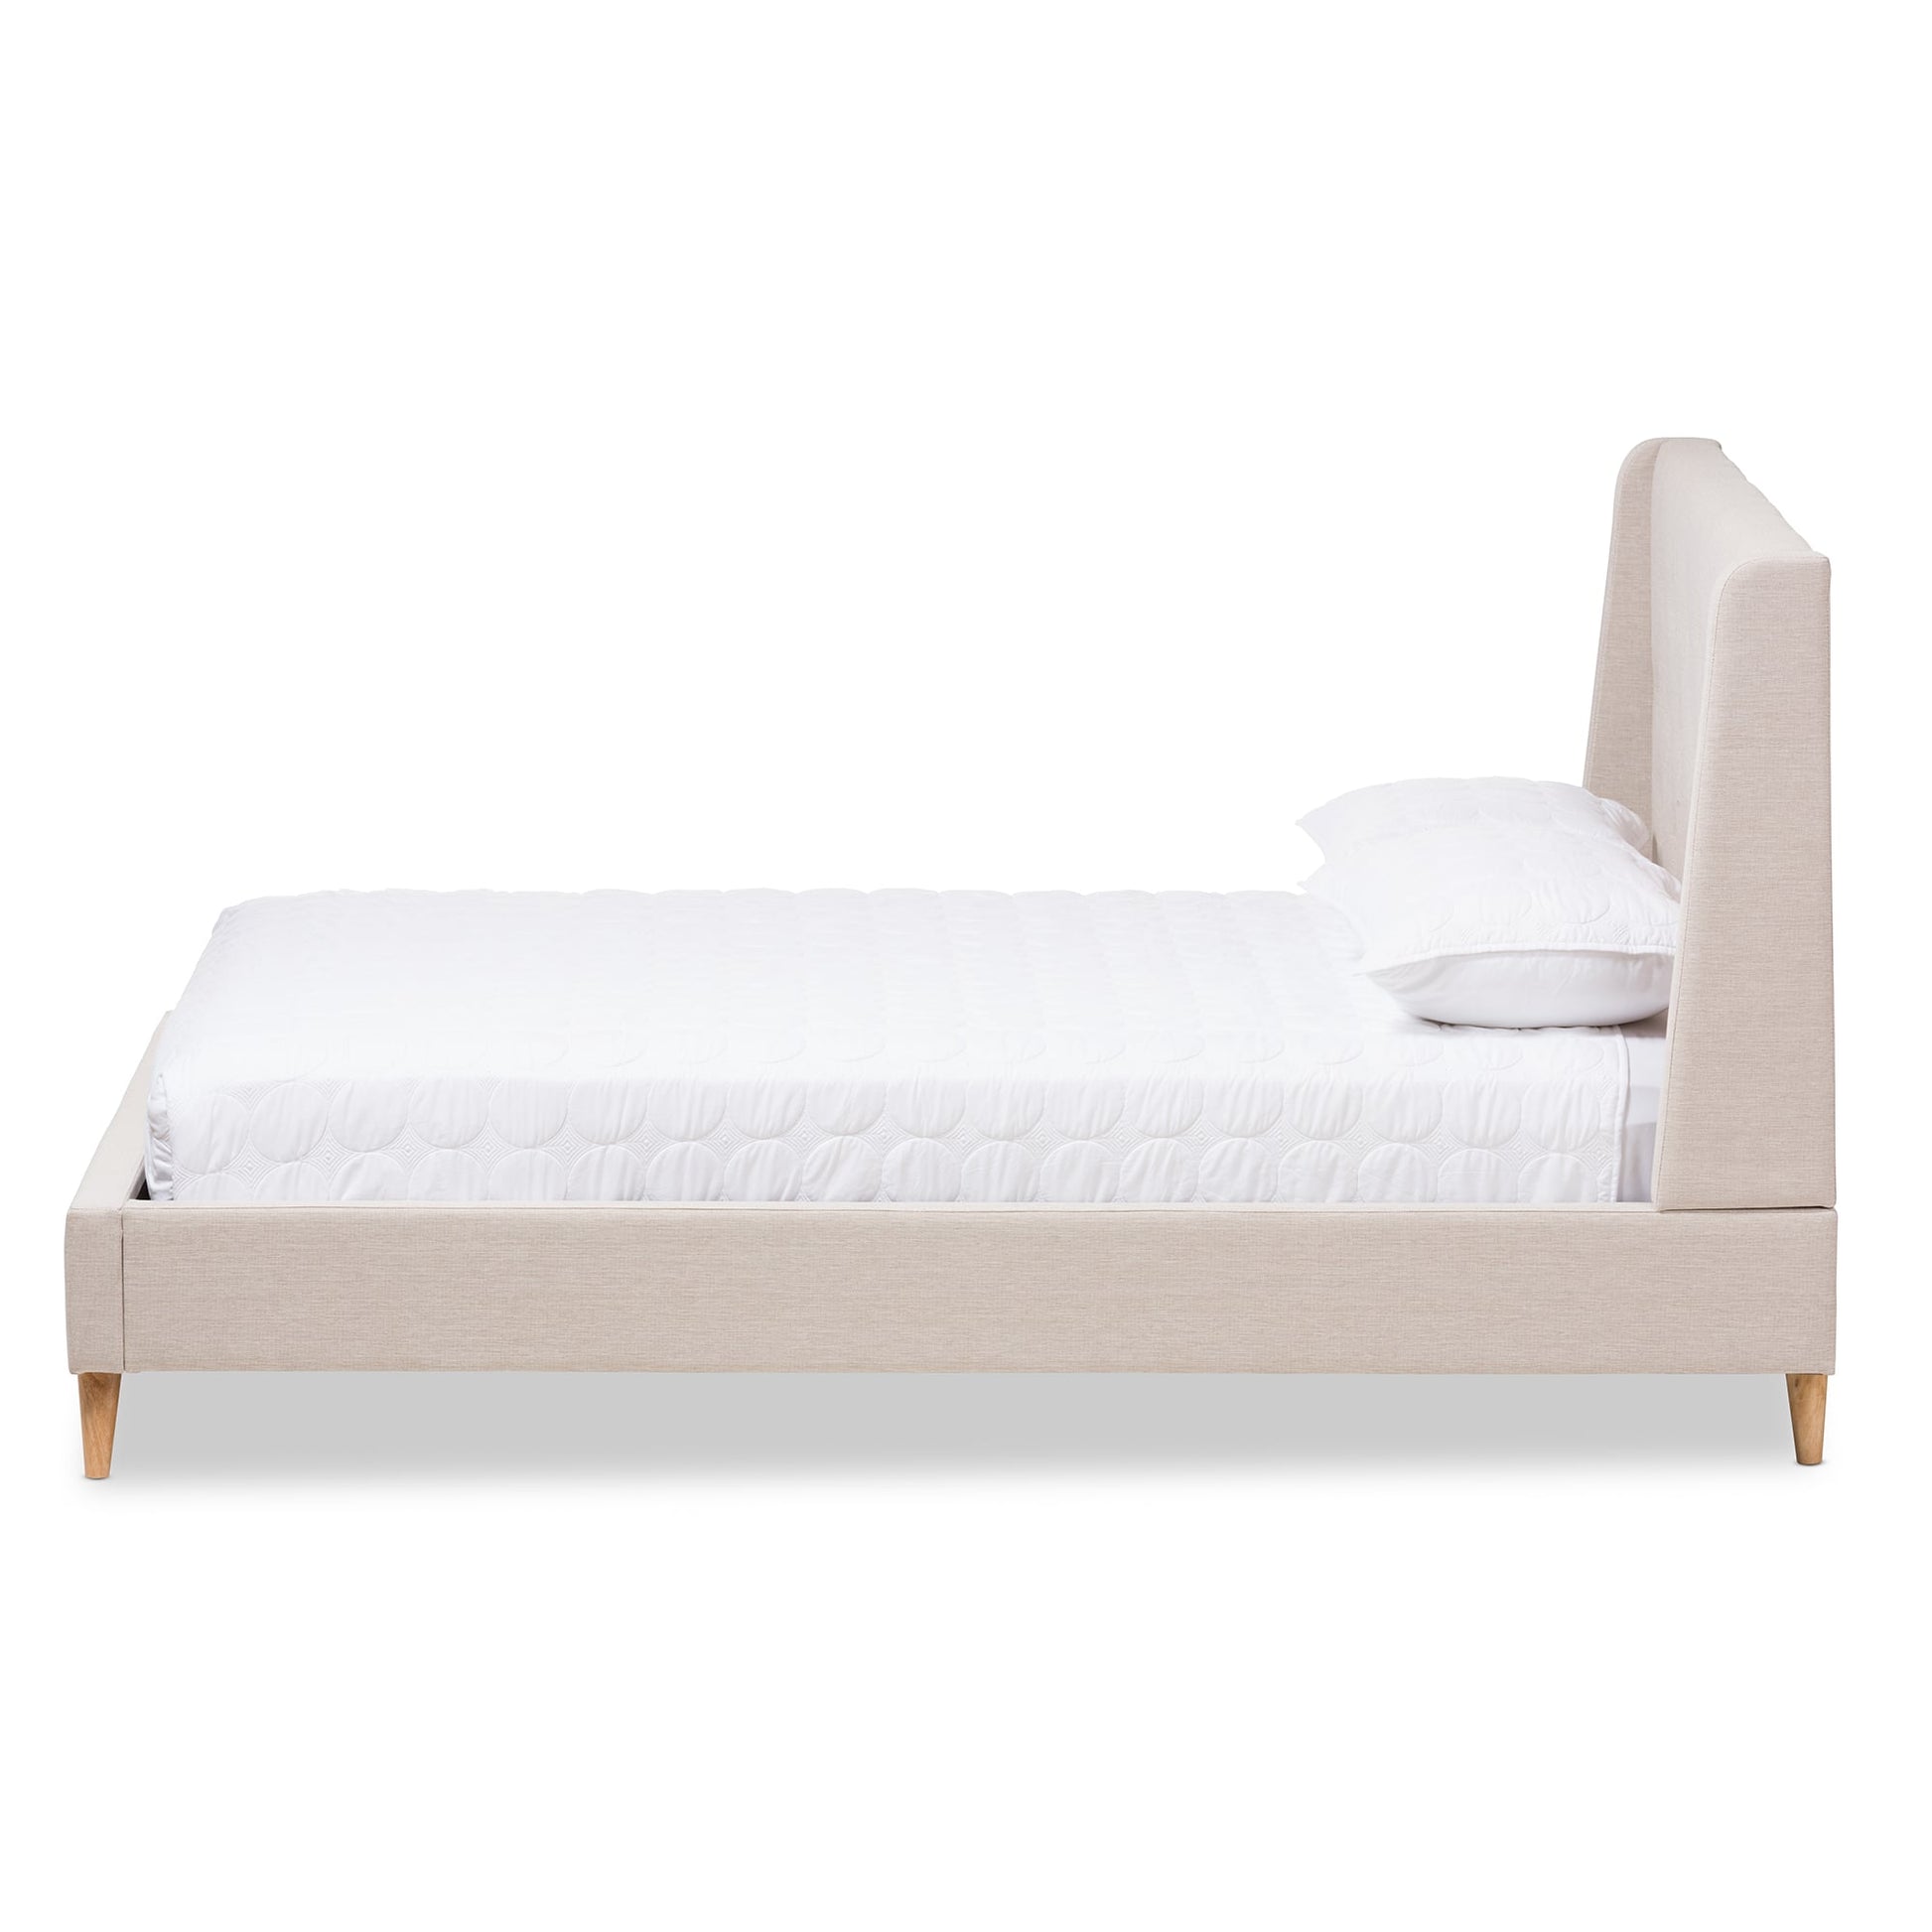 baxton studio adelaide retro modern light beige fabric upholstered queen size platform bed | Modish Furniture Store-4